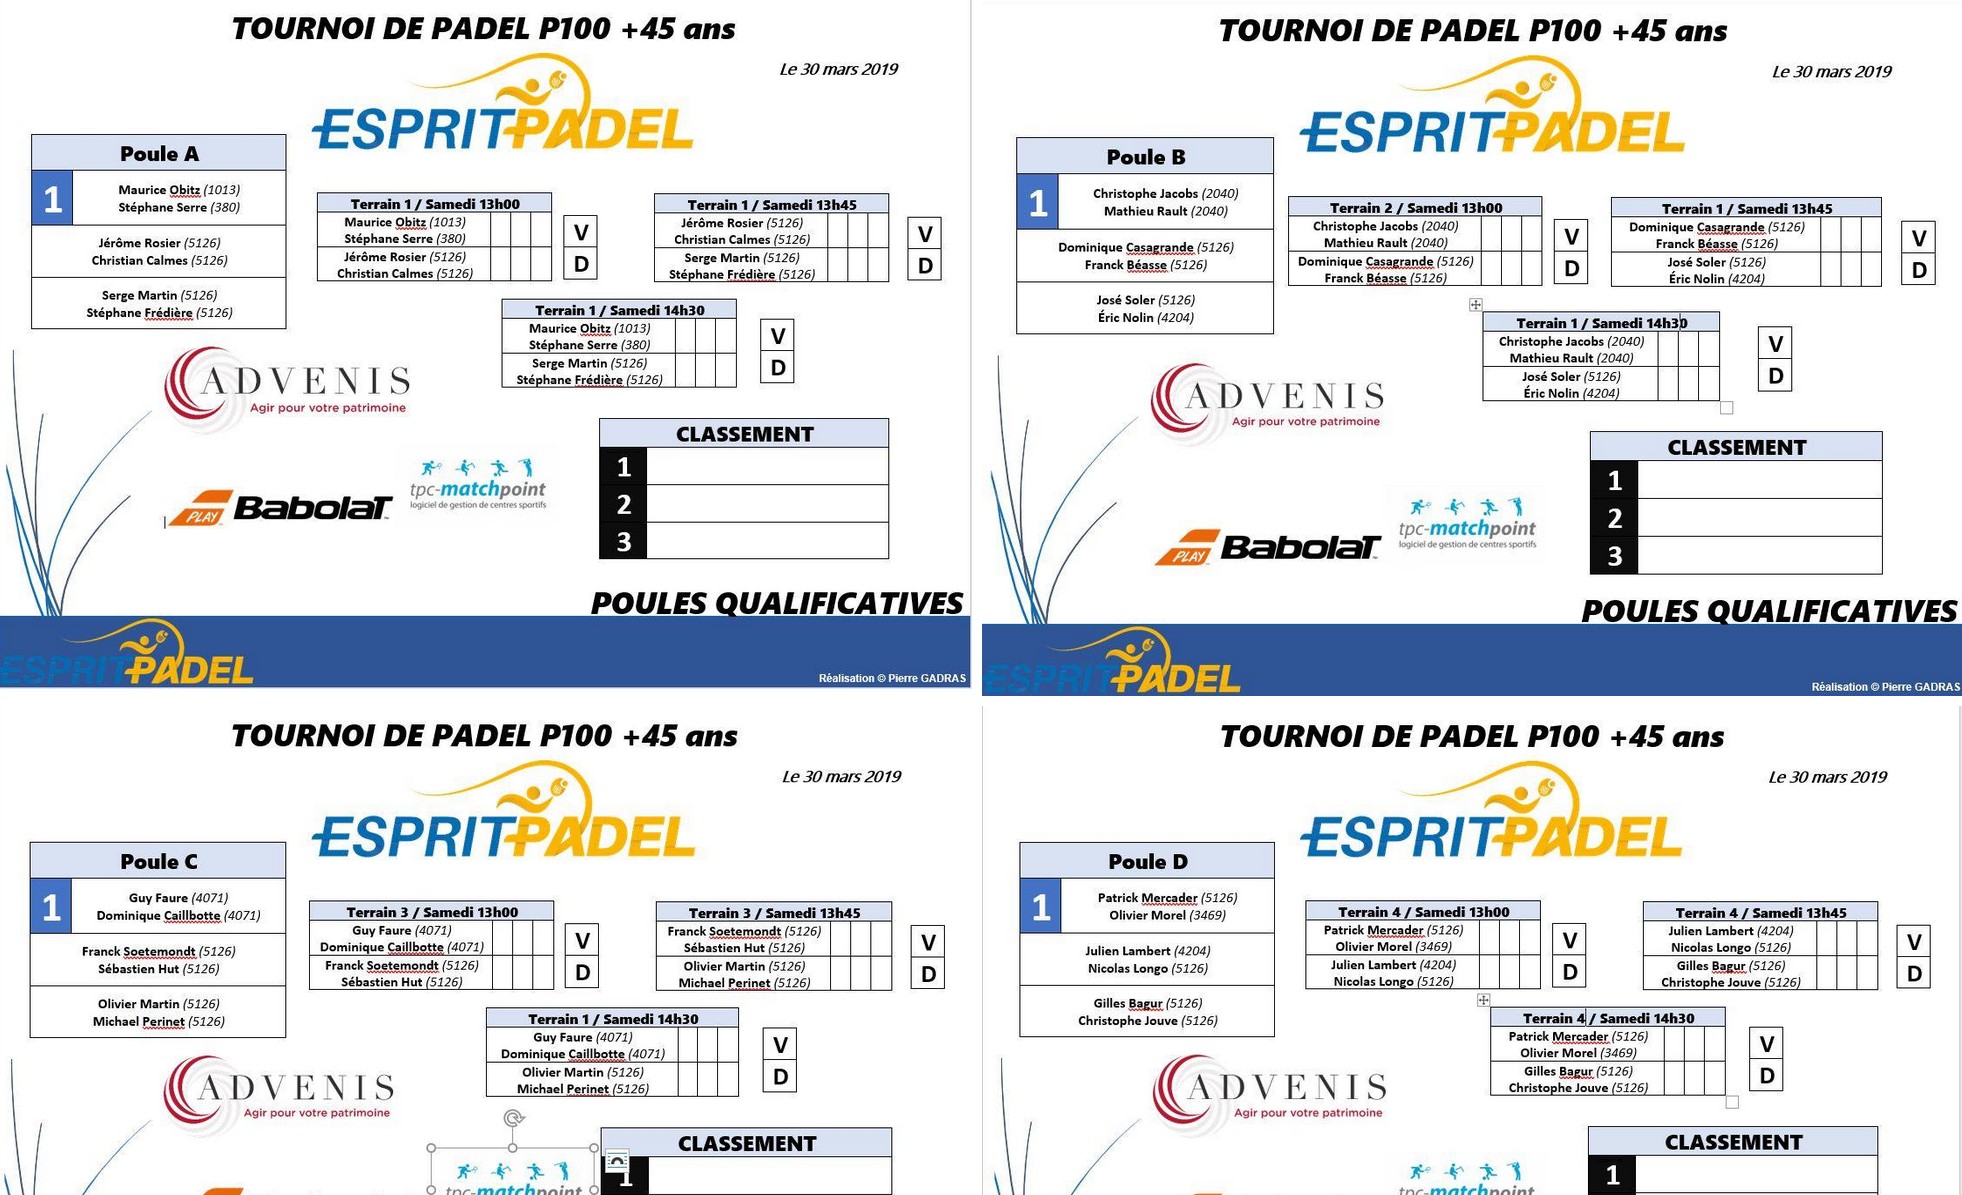 1st Lyon tournament +45 years at Esprit Padel